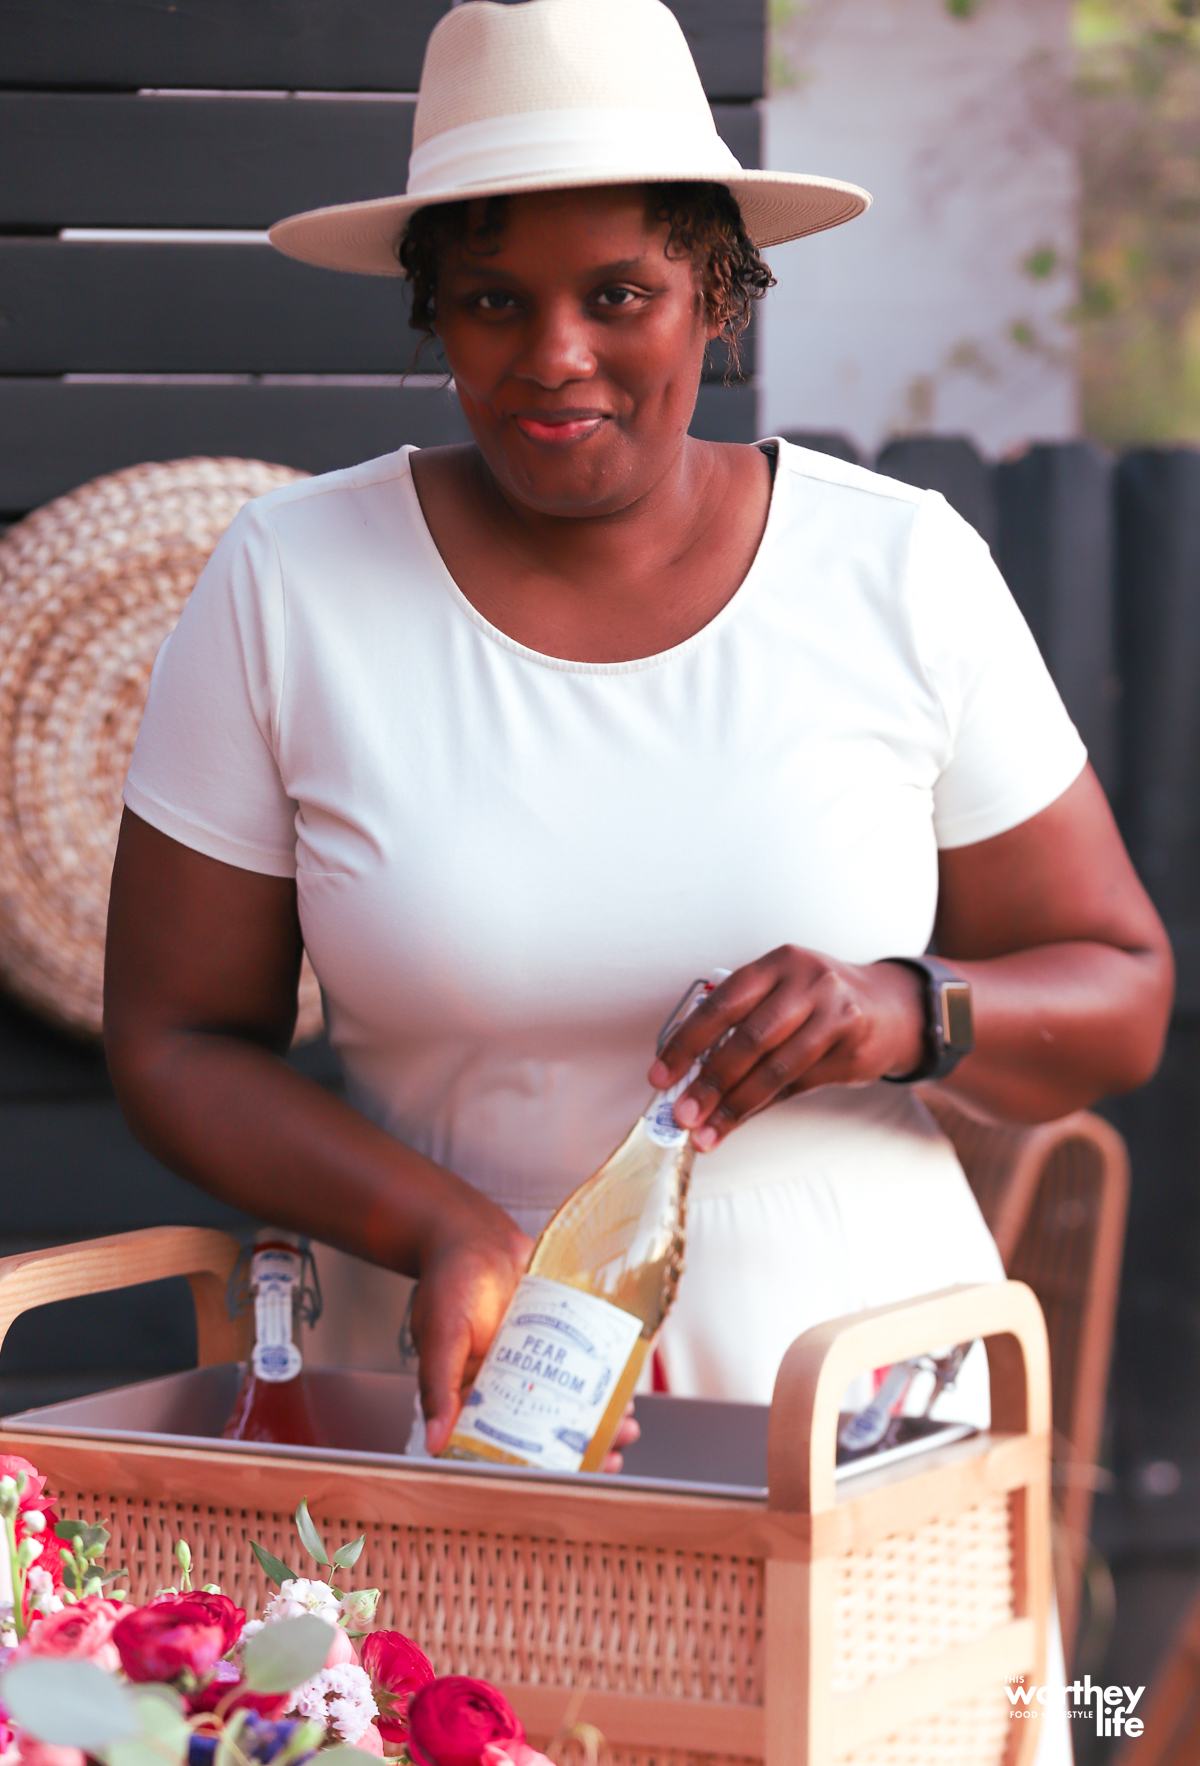 Woman serving drinks at an outdoor brunch